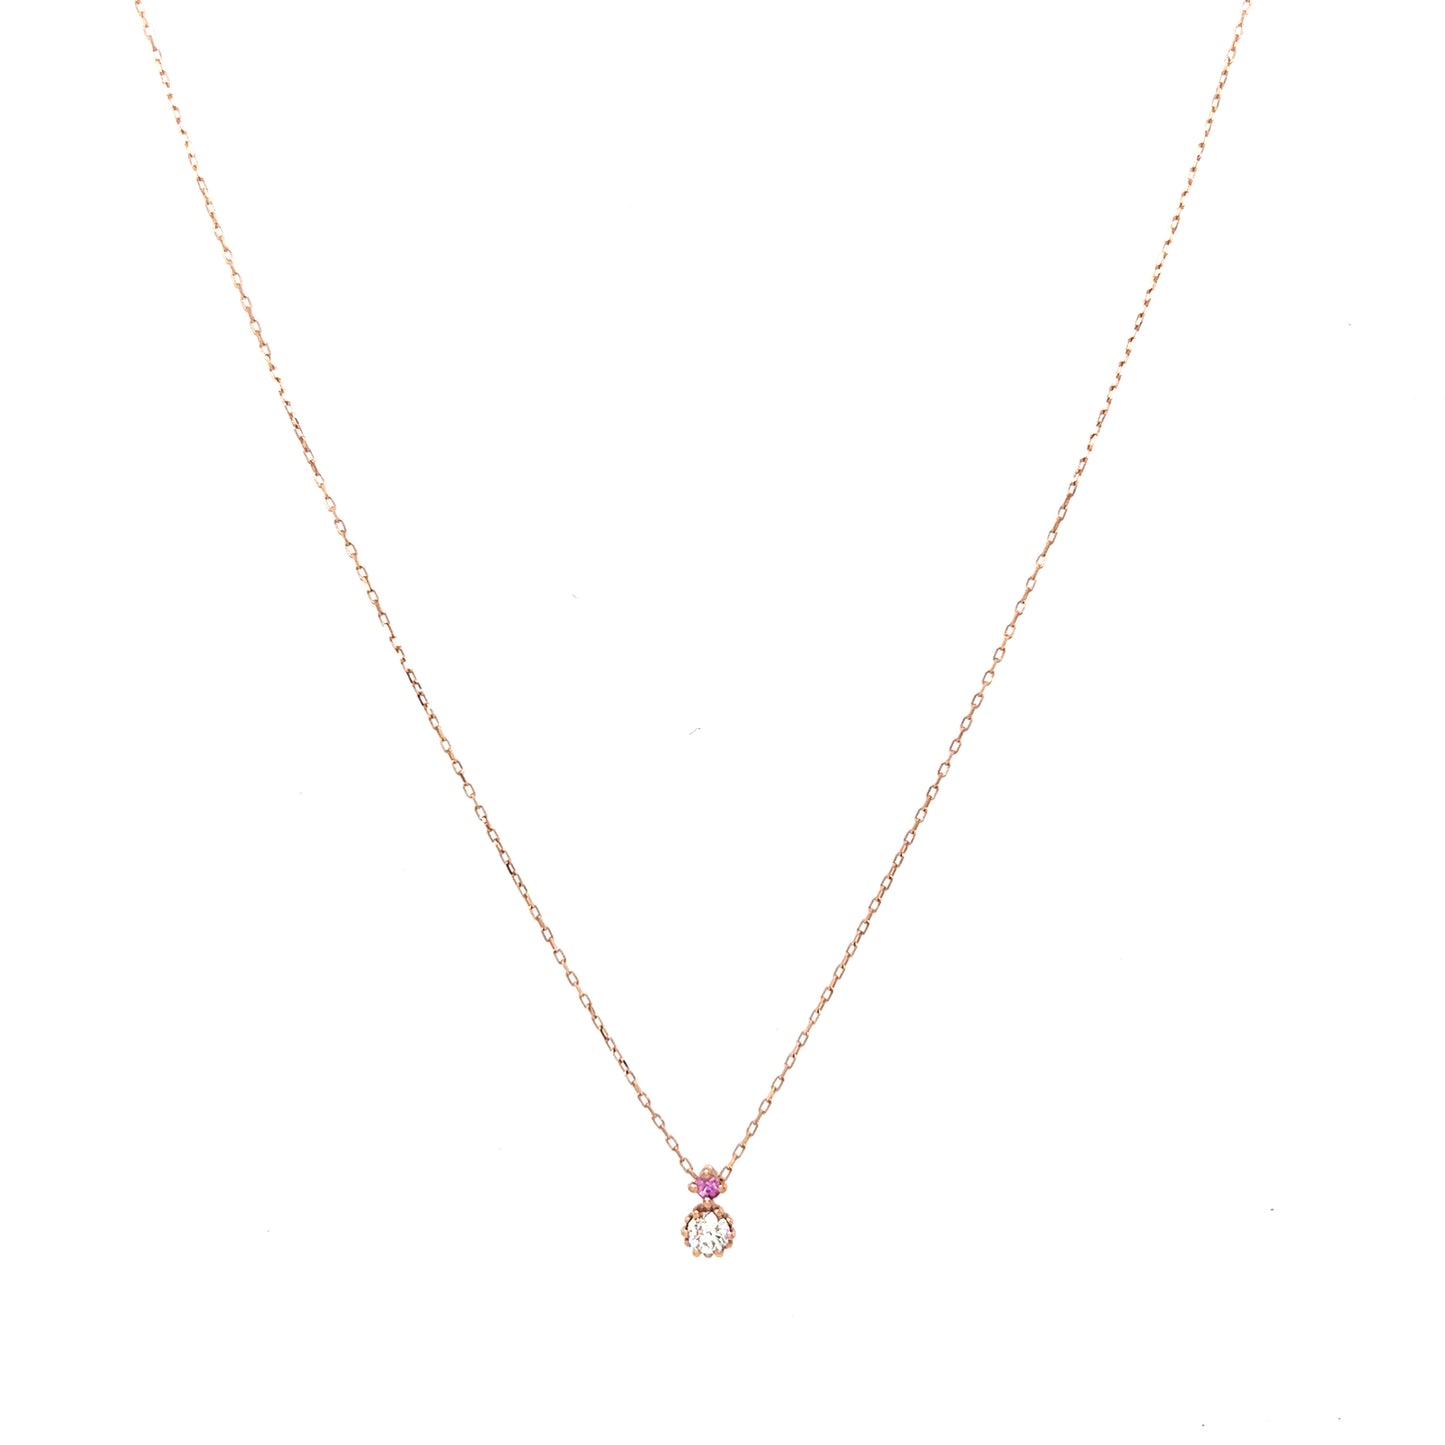 Pink sapphire pendant necklace